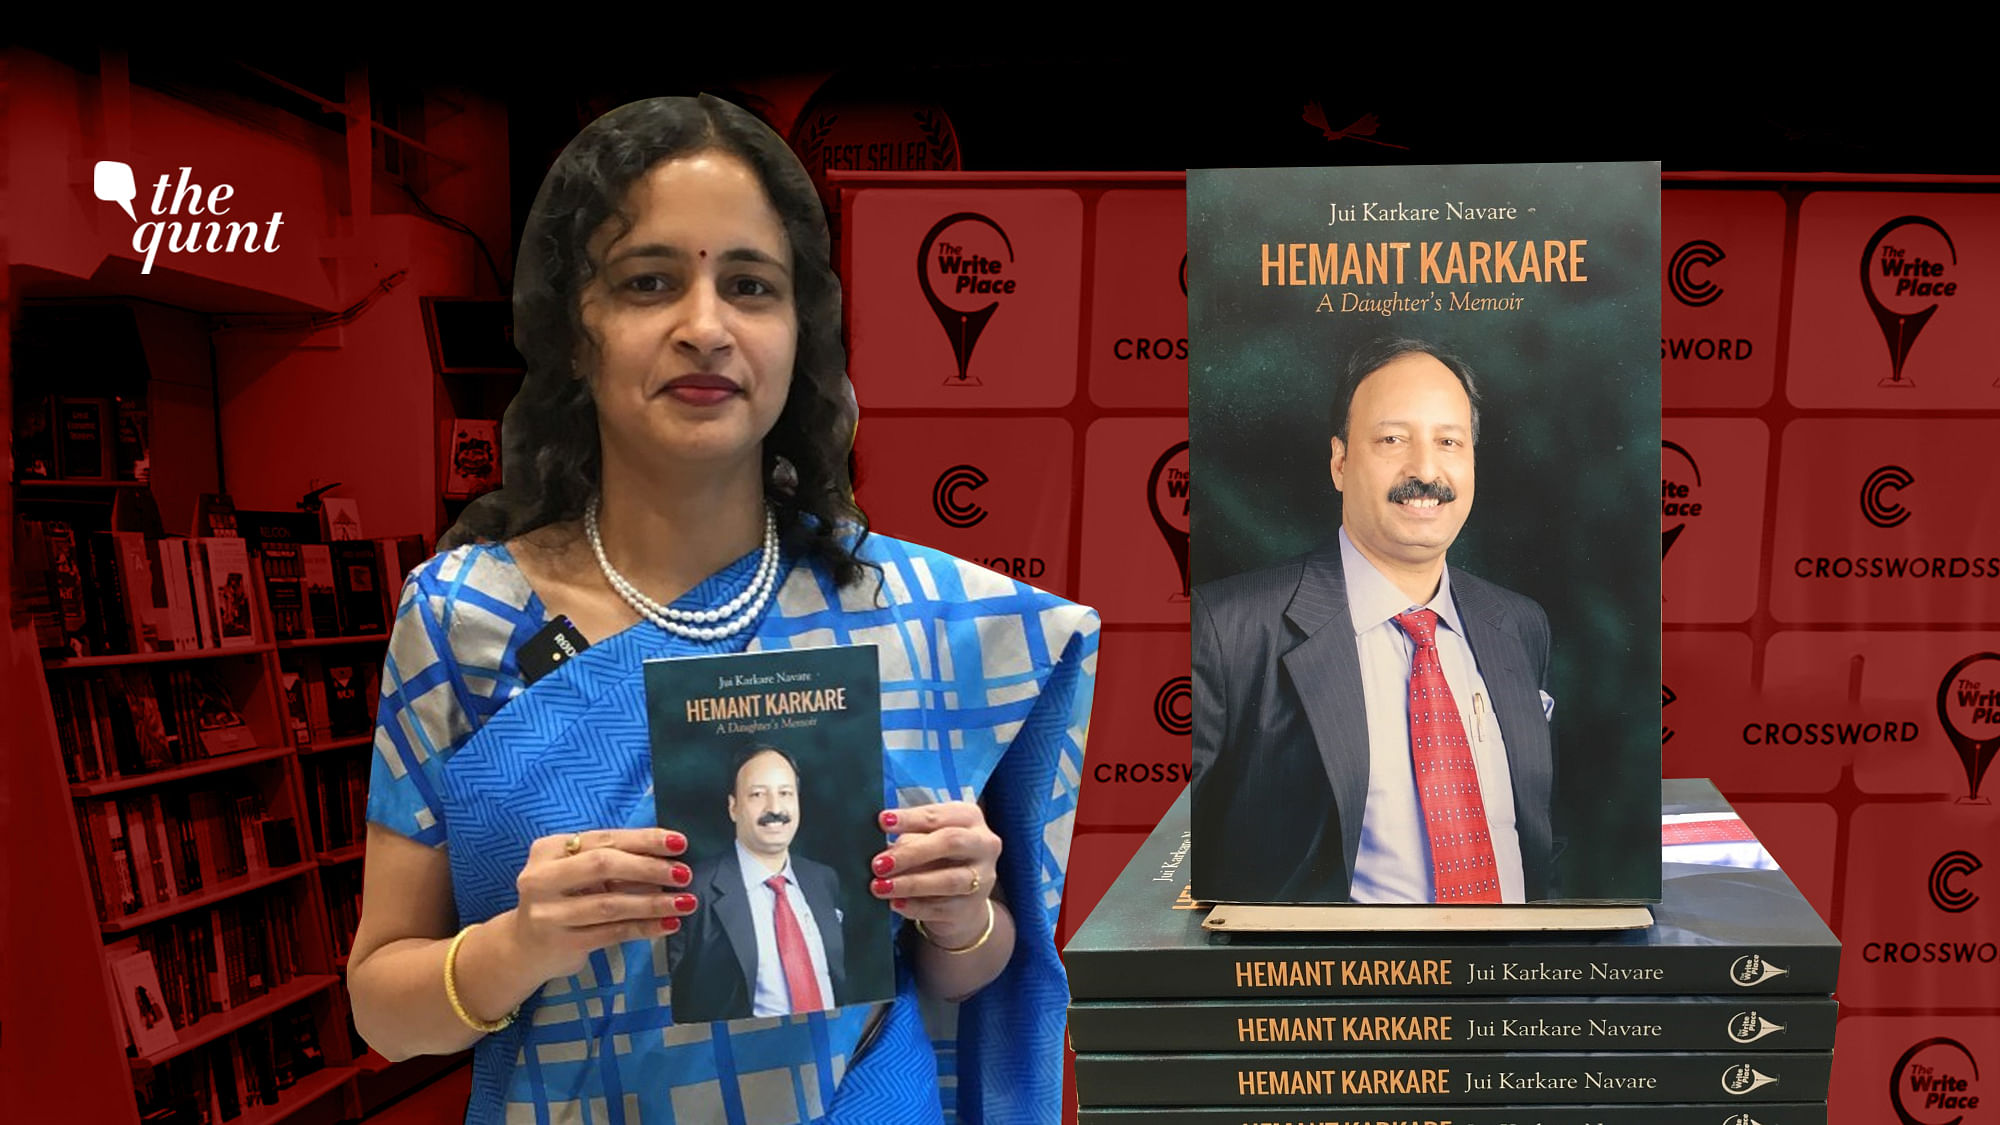 who killed hemant karkare book pdf